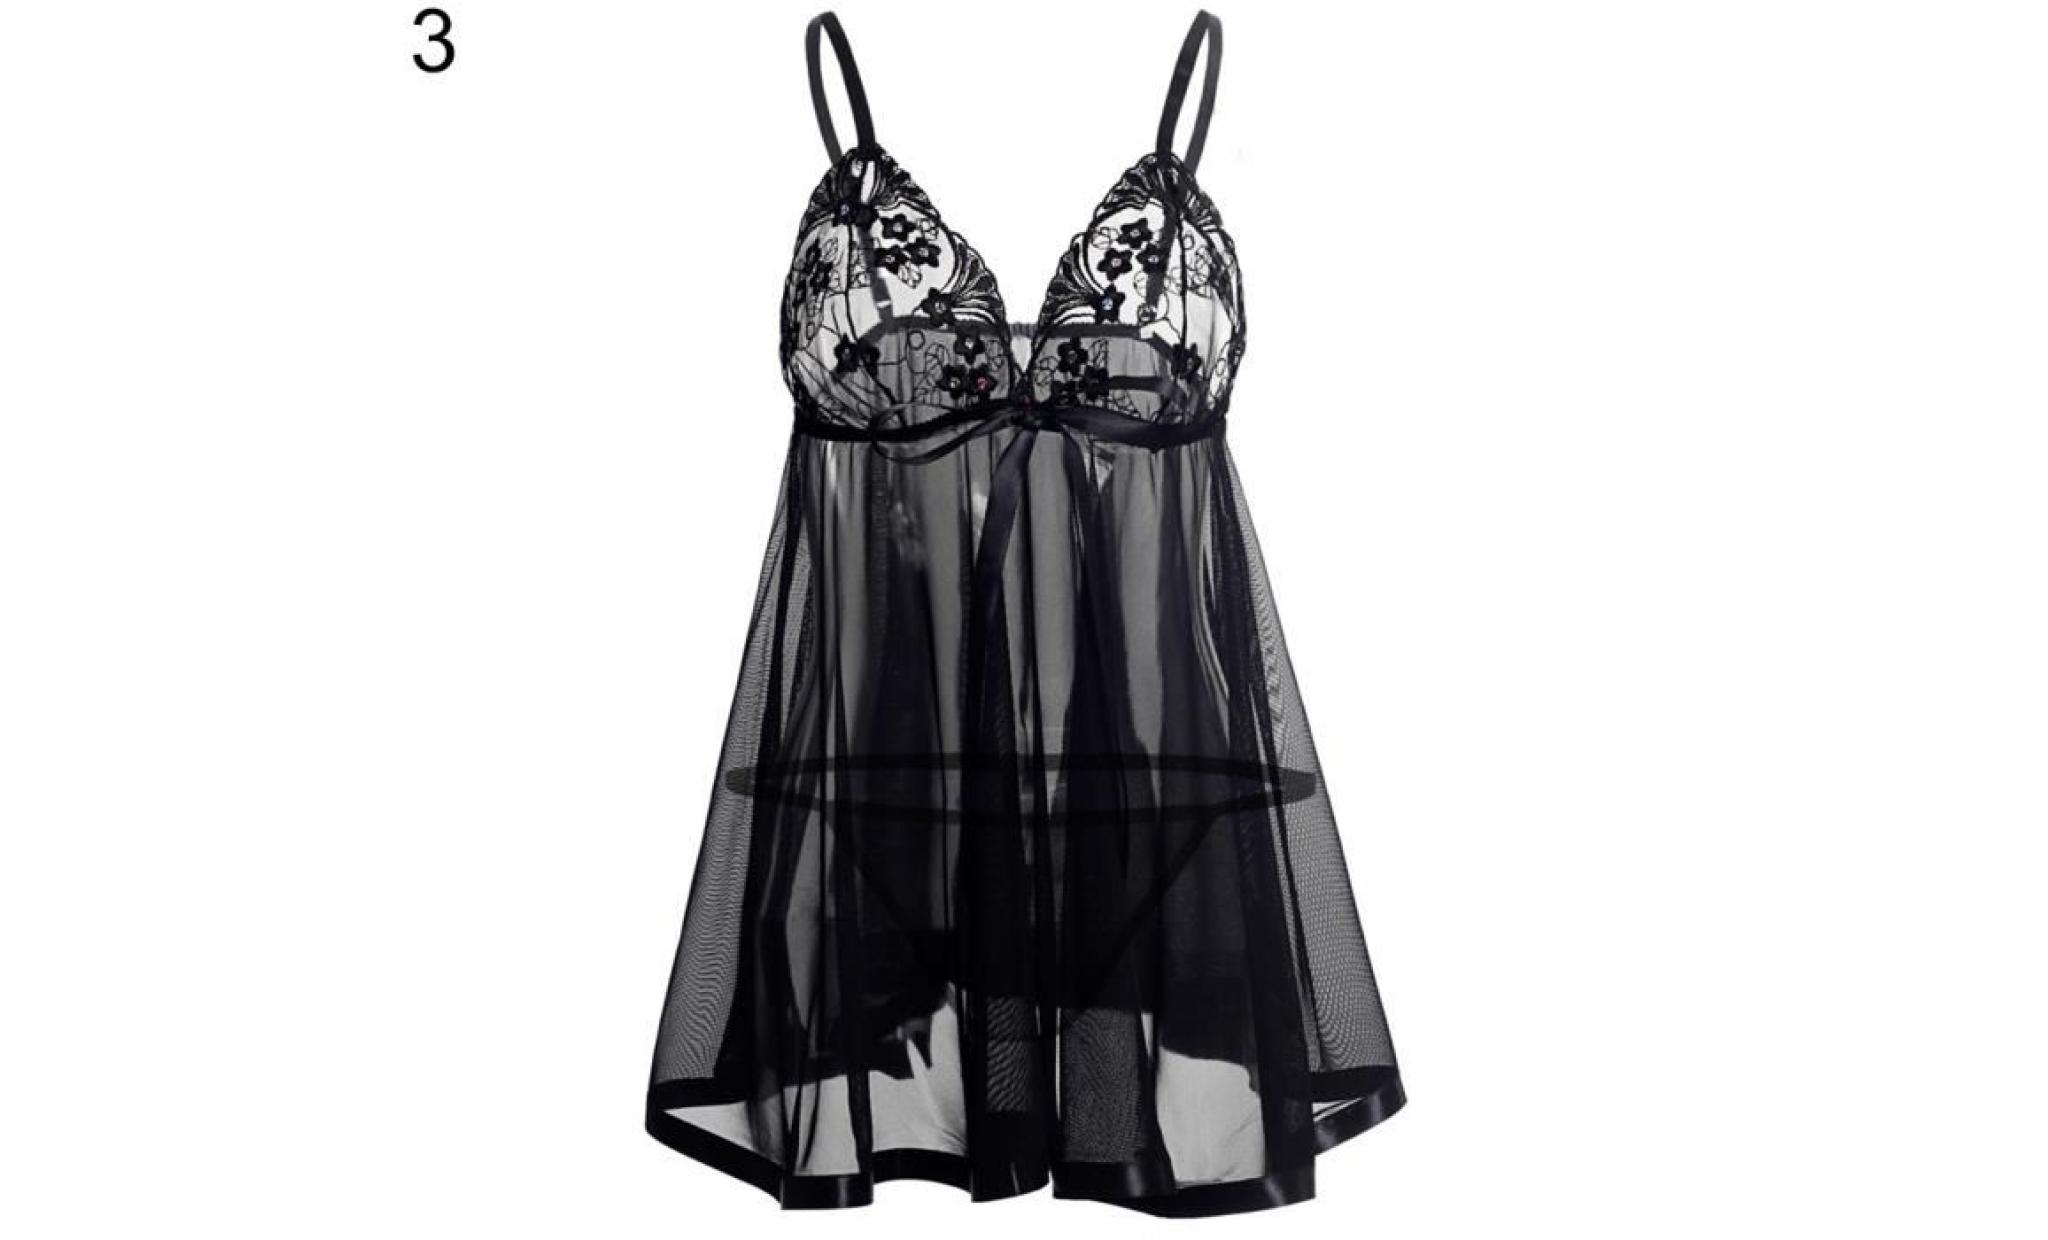 robe en dentelle transparente transparente à lacets pour femmes throng sleepwear nightwear black xl